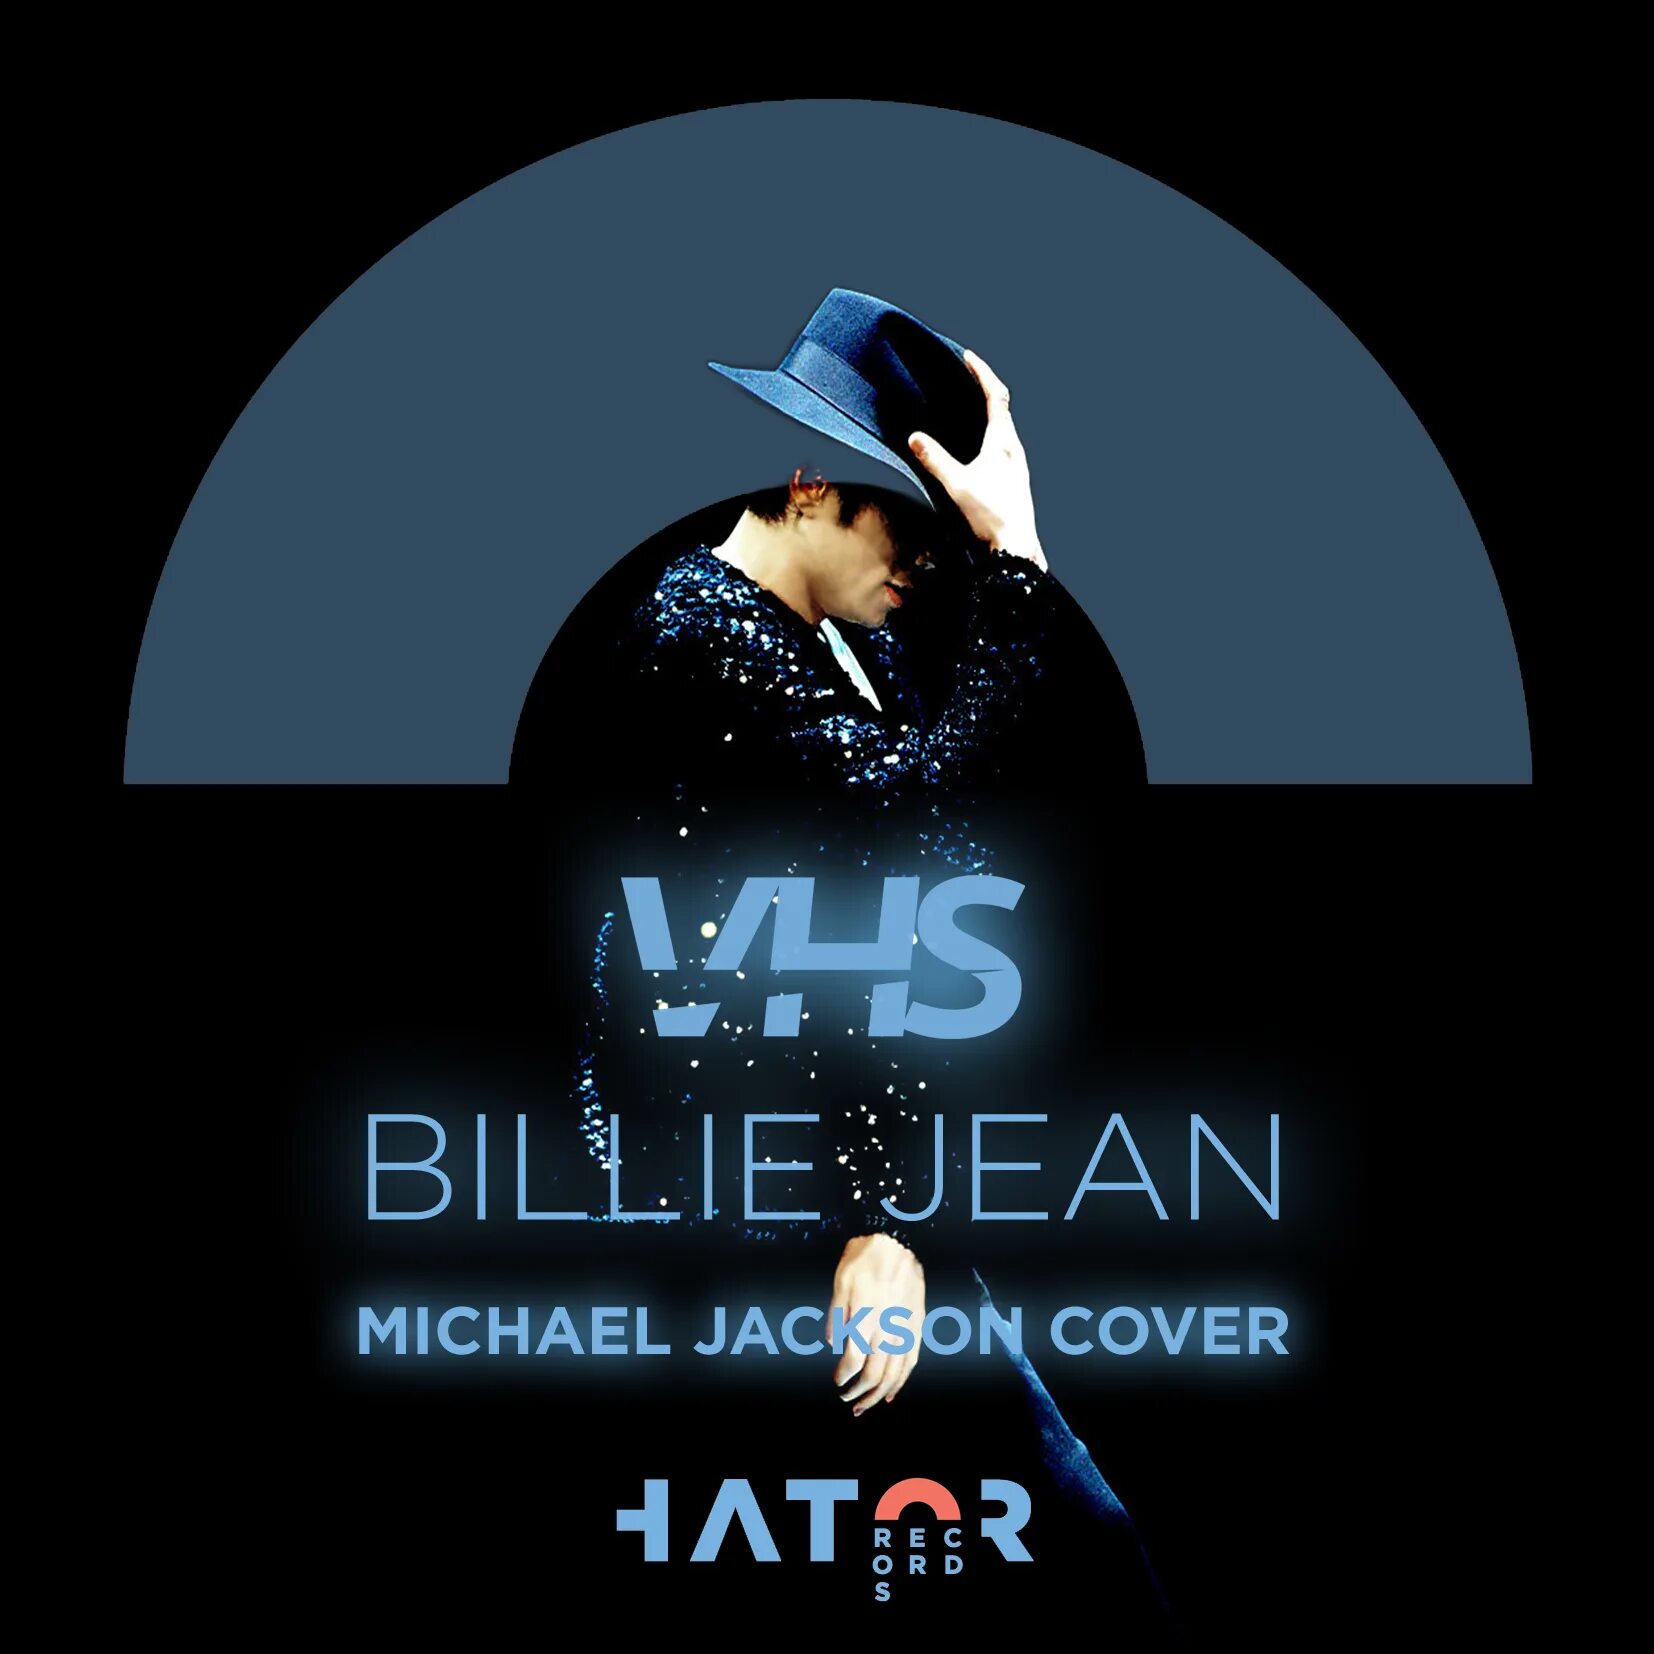 Michael Jackson Billie Jean 1982. Michael Jackson - Billie Jean альбом. Michael Jackson - Billie Jean обложка альбома. Песня майкла джексона billie jean